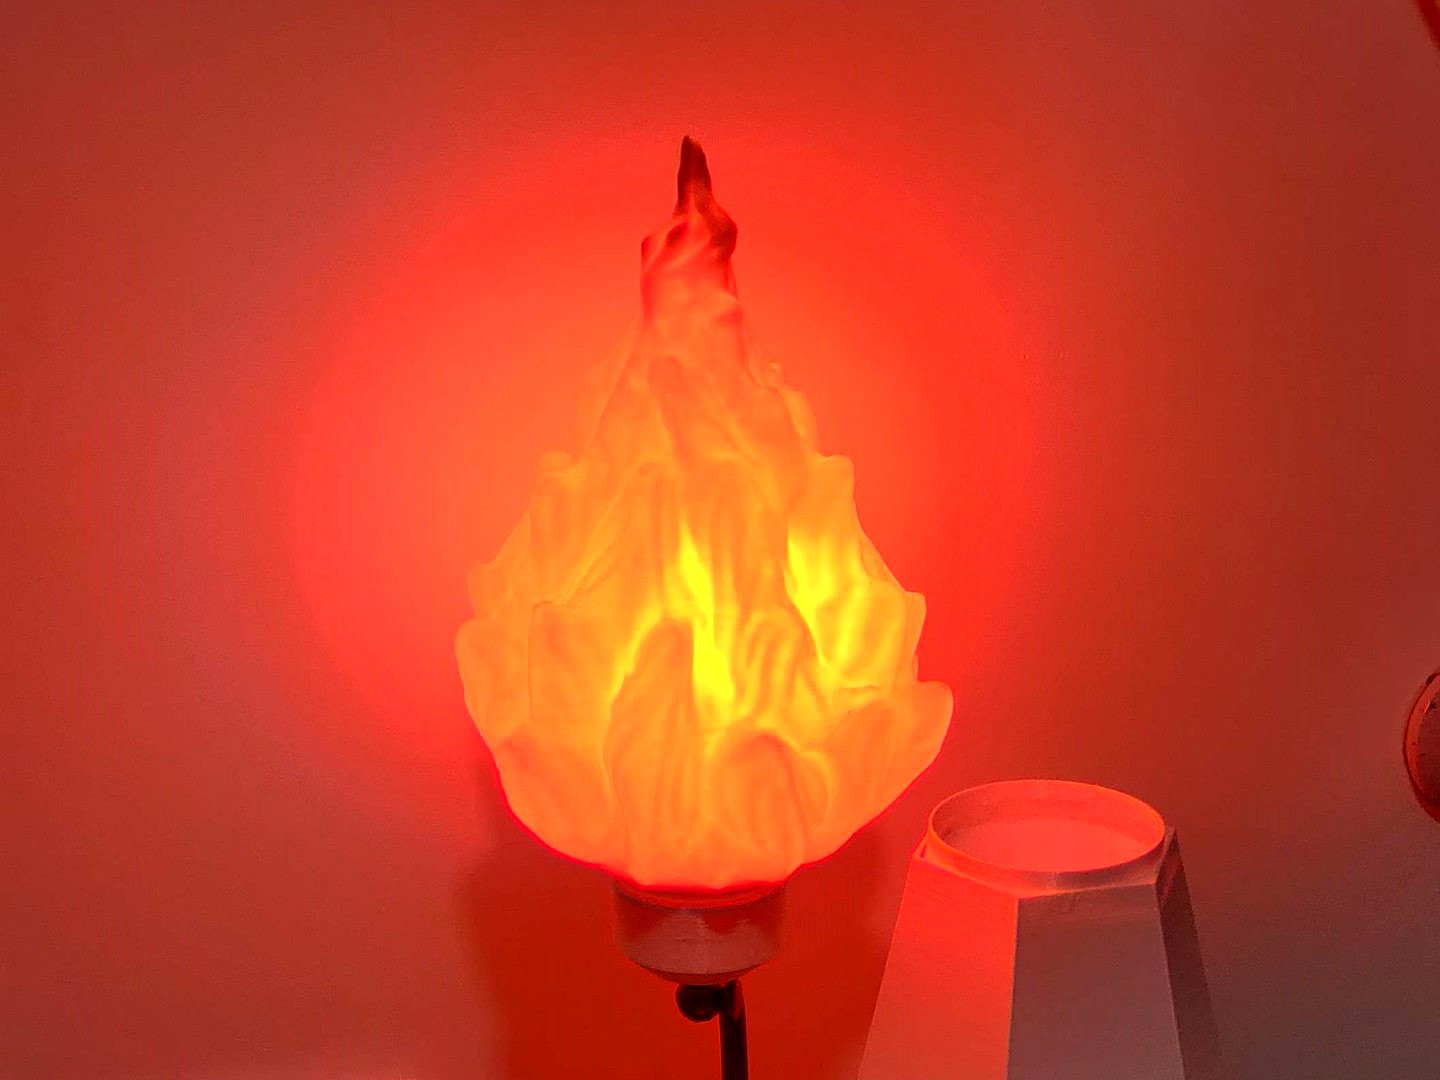 Flame lampshade